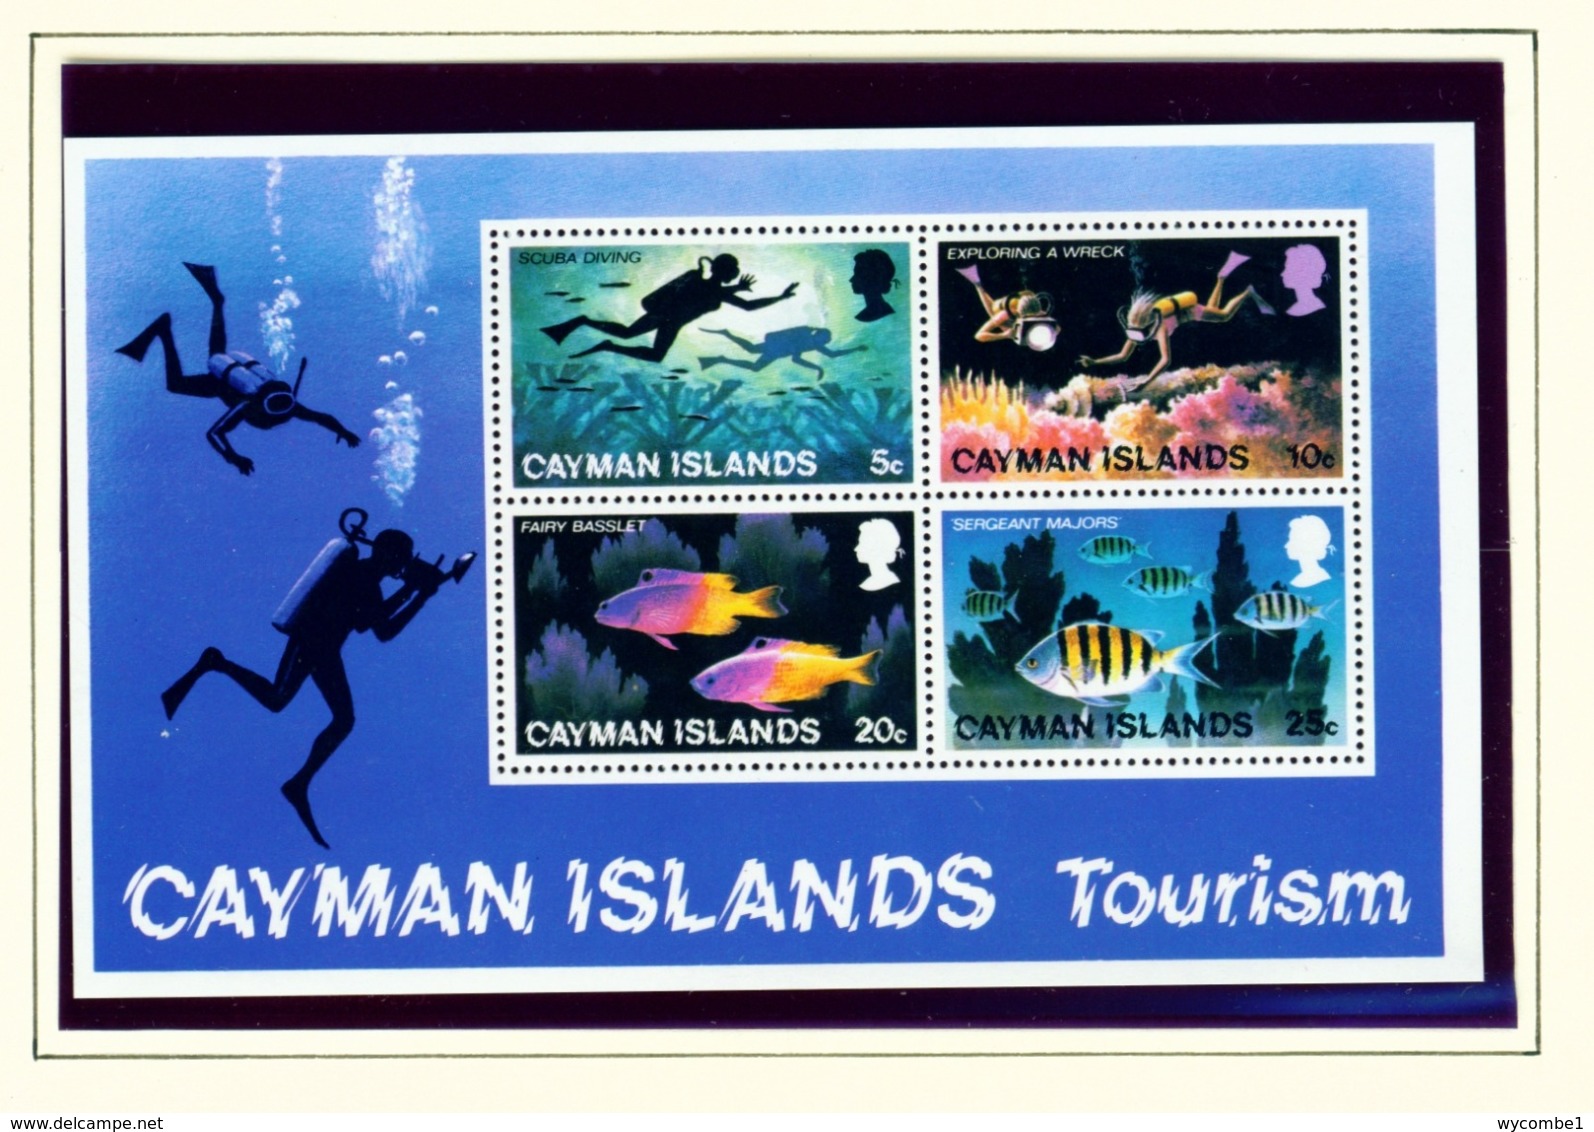 CAYMAN ISLANDS - 1977 Tourism Miniature Sheet Unmounted/Never Hinged Mint - Cayman Islands